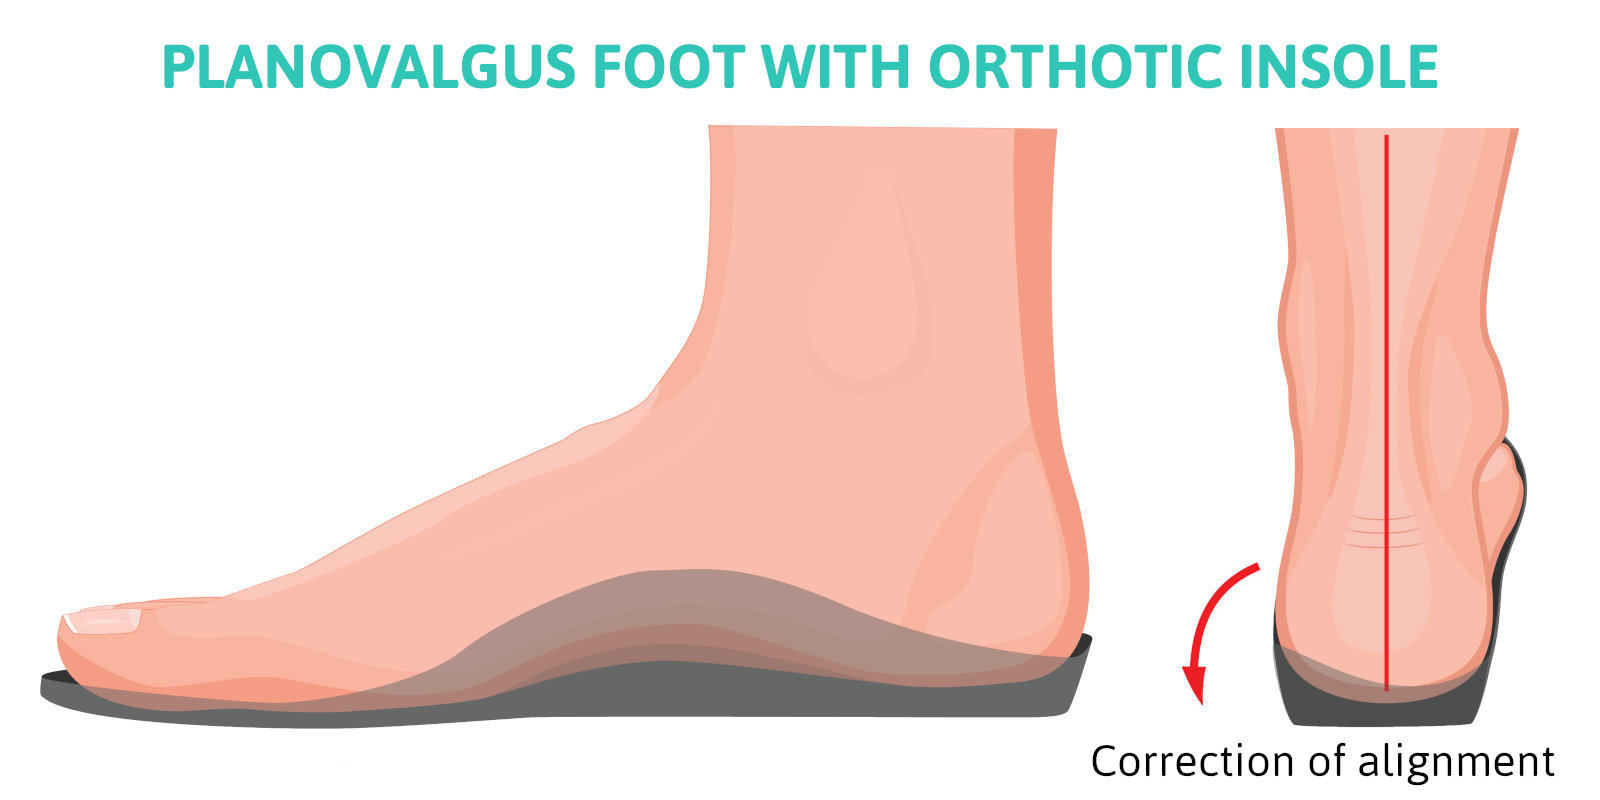 Flat Feet Pronation - Complications from Overpronation